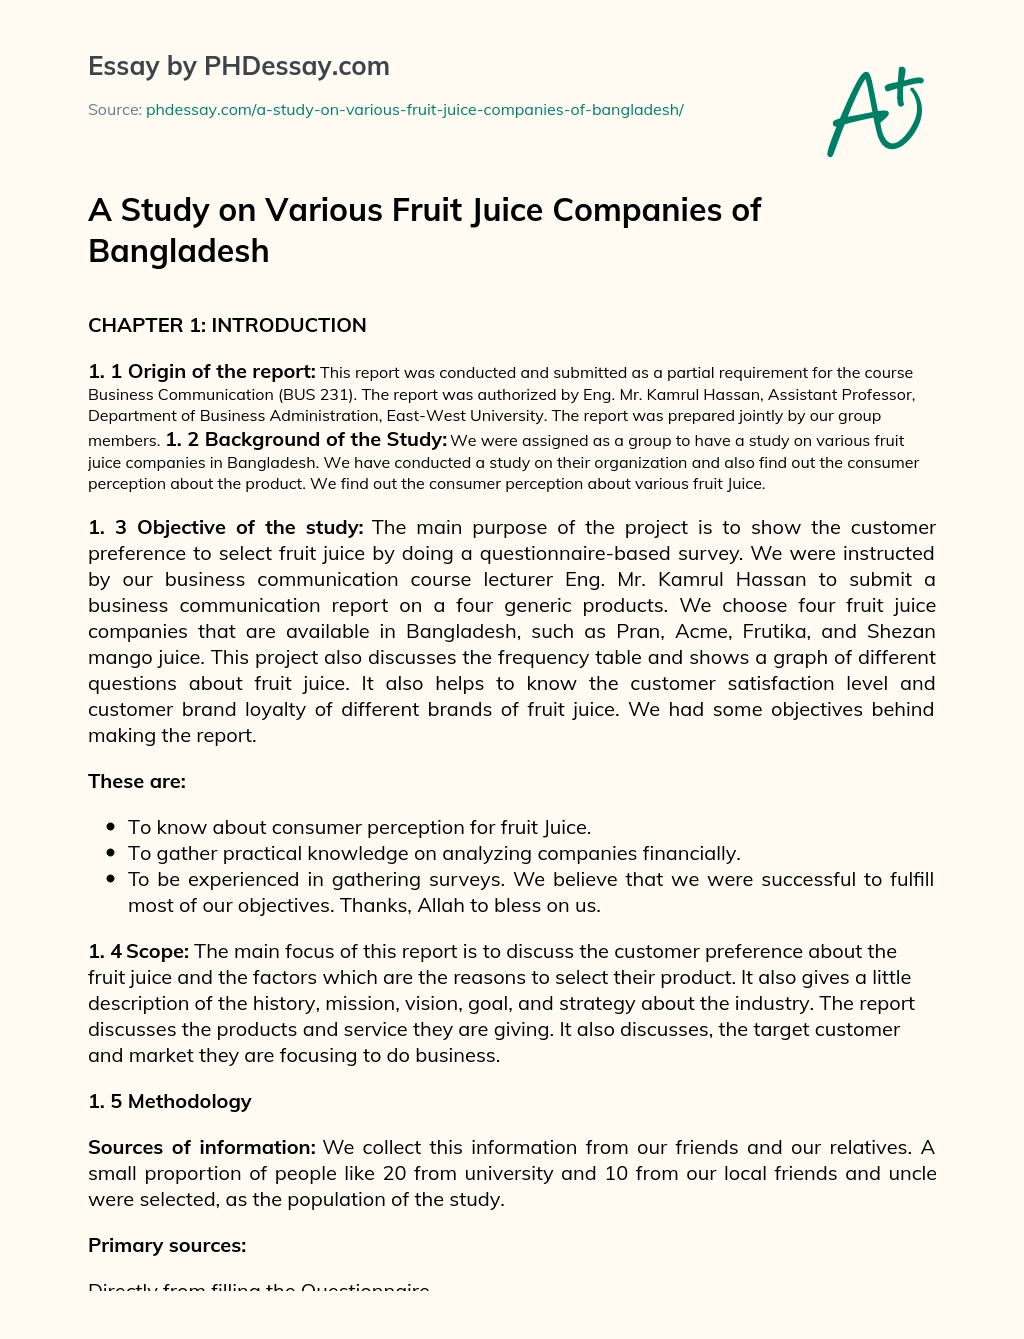 A Study on Various Fruit Juice Companies of Bangladesh essay